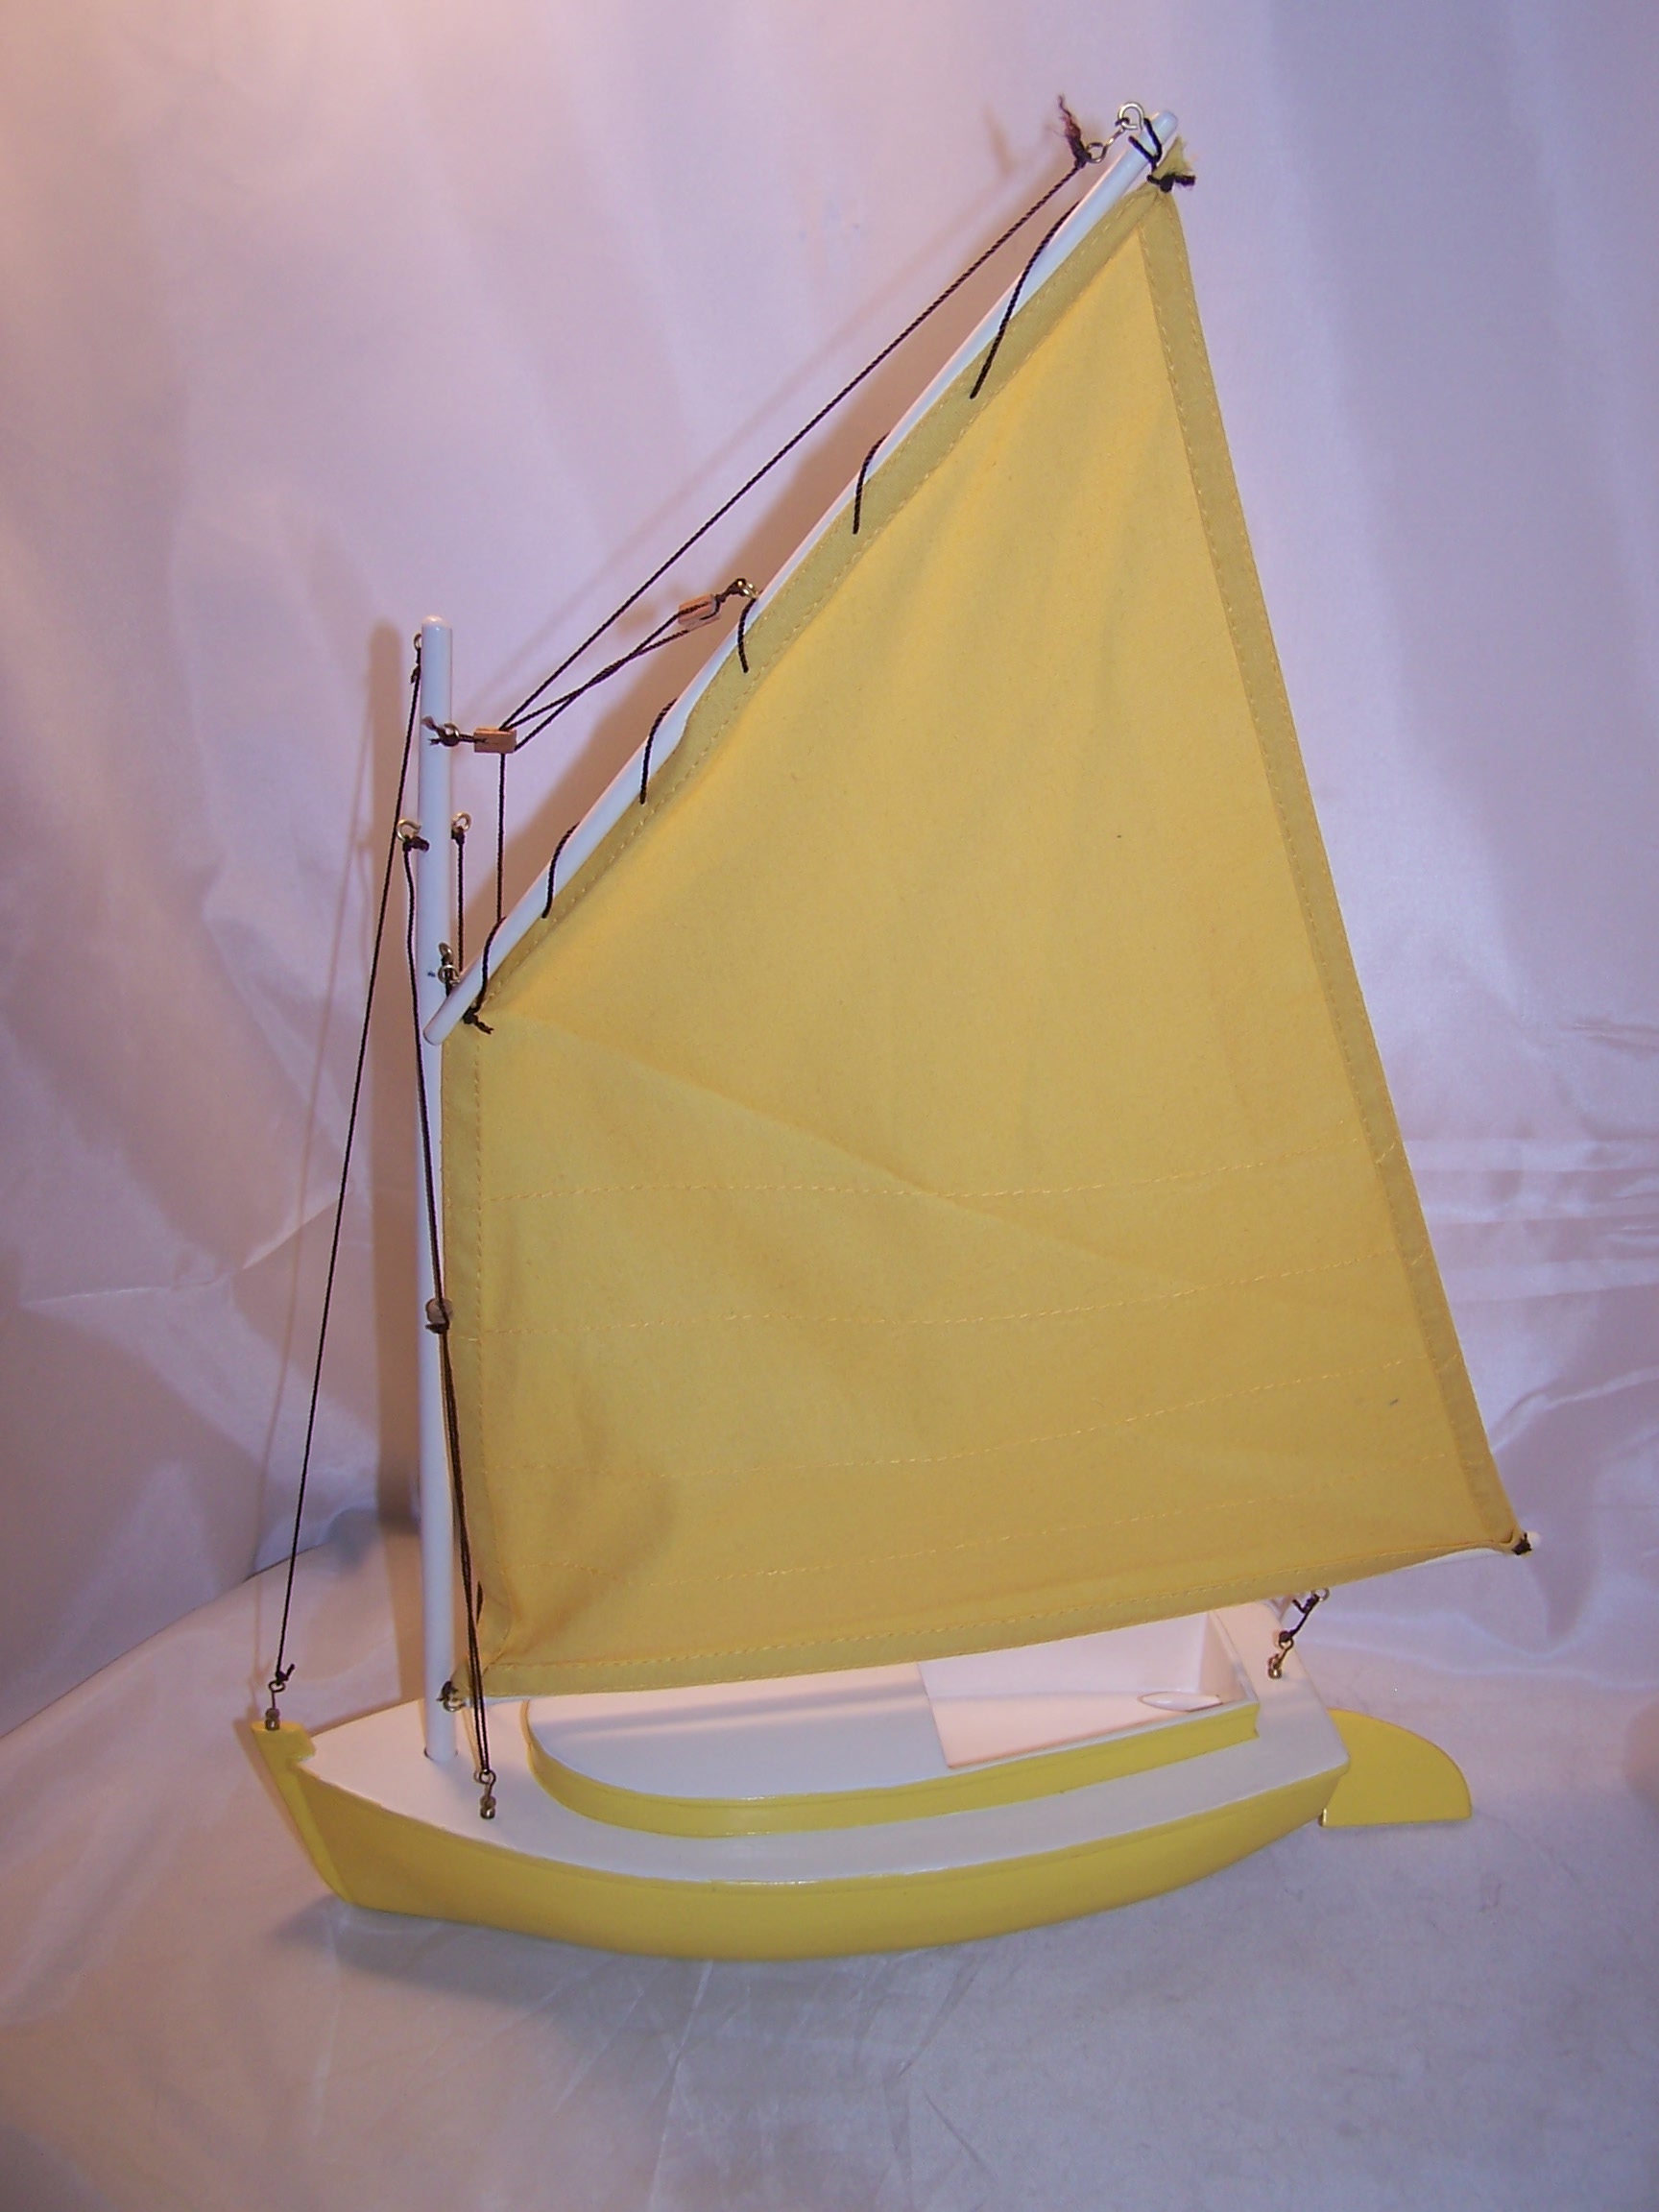 Image 4 of Sailboat, Barnegat Bay Catboat Model, Floats, Yellow, White